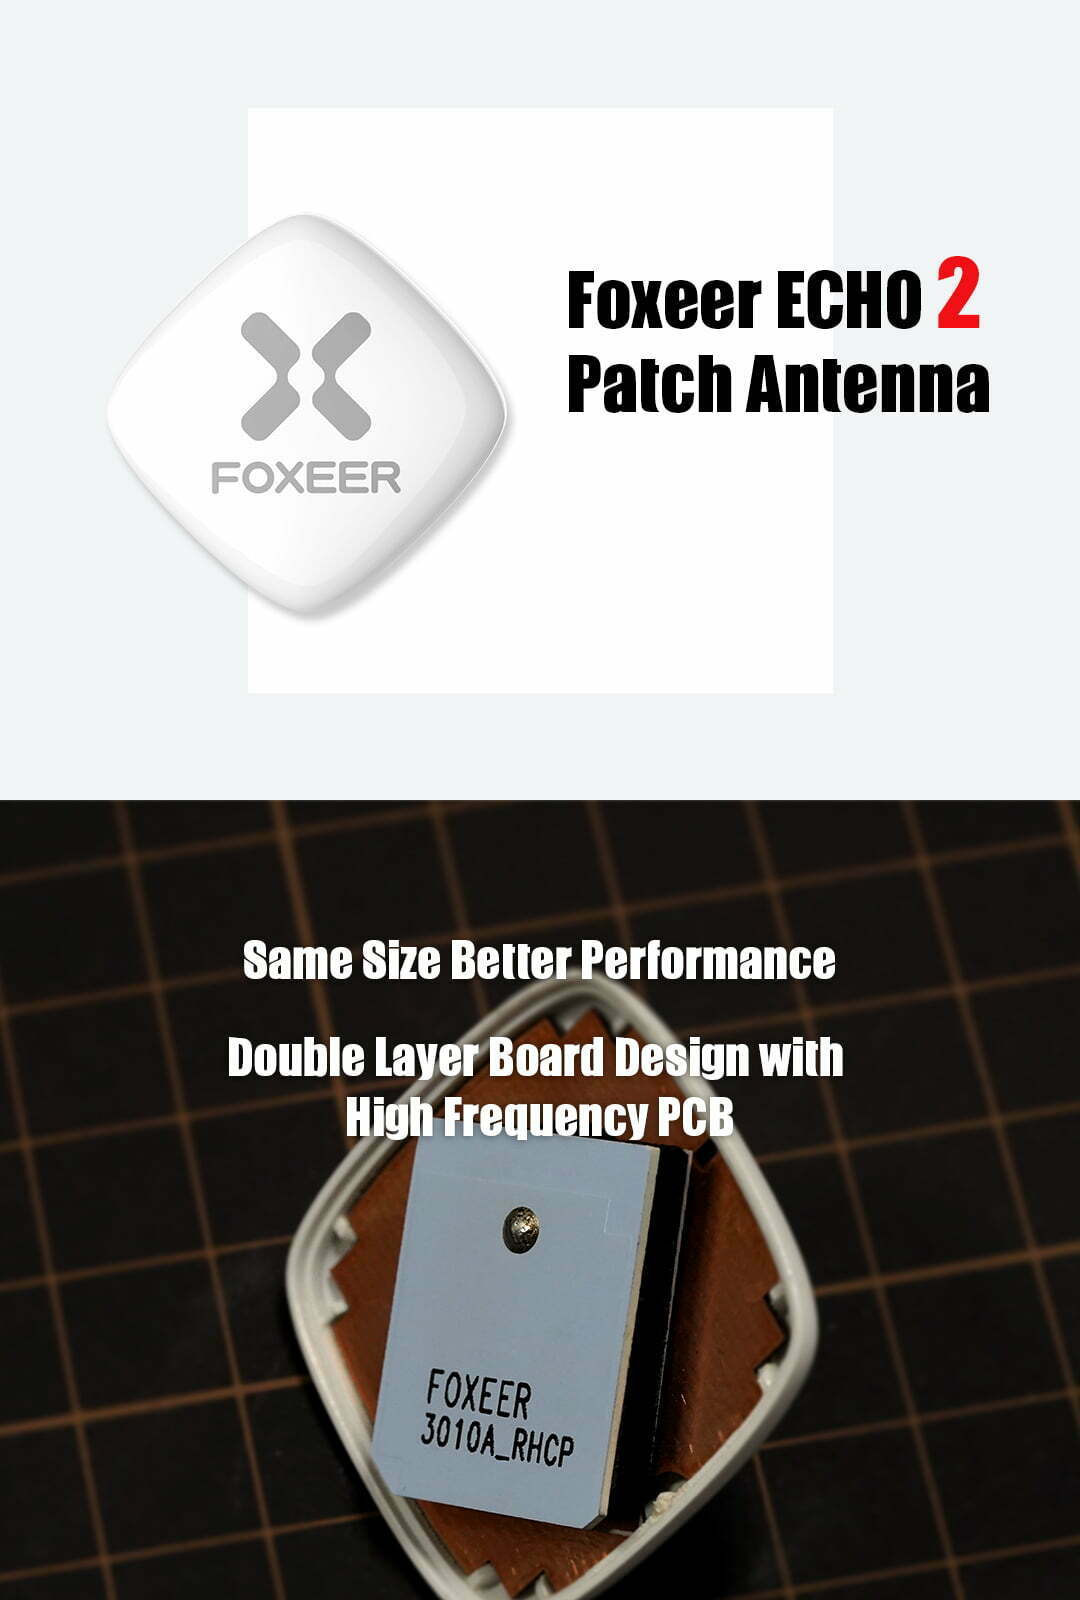 foxeer echo 2 9dbi directional patch antenna description mantisfpv australia 01